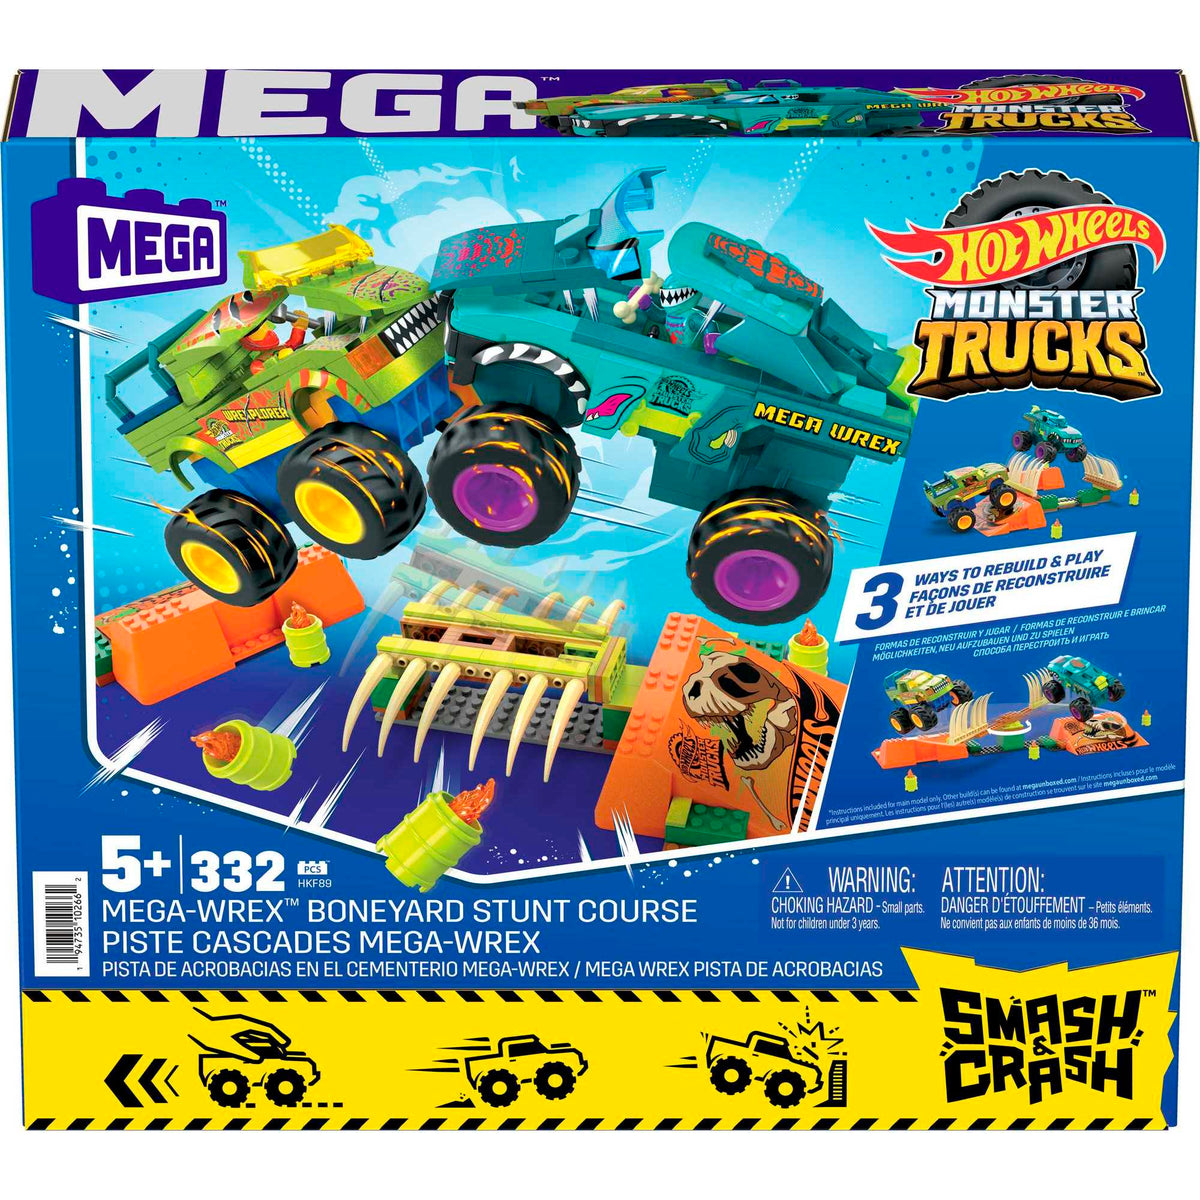 MEGA Hot Wheels Smash 'n Crash Mega-Wrex Boneyard Stunt Course